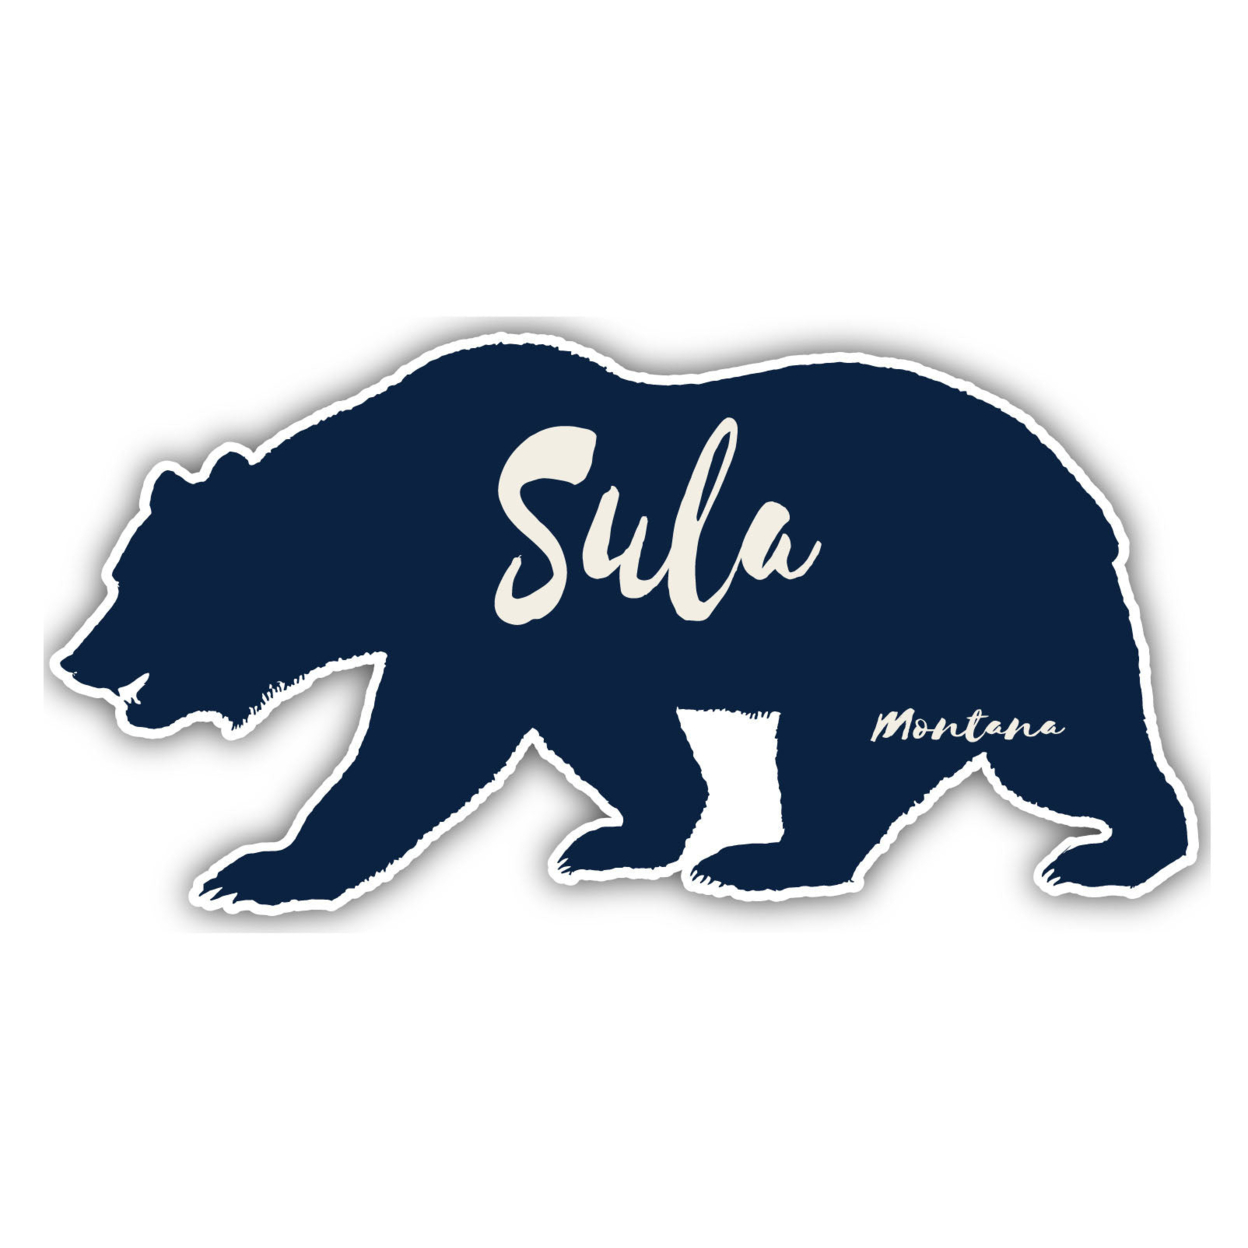 Sula Montana Souvenir Decorative Stickers (Choose Theme And Size) - Single Unit, 2-Inch, Tent